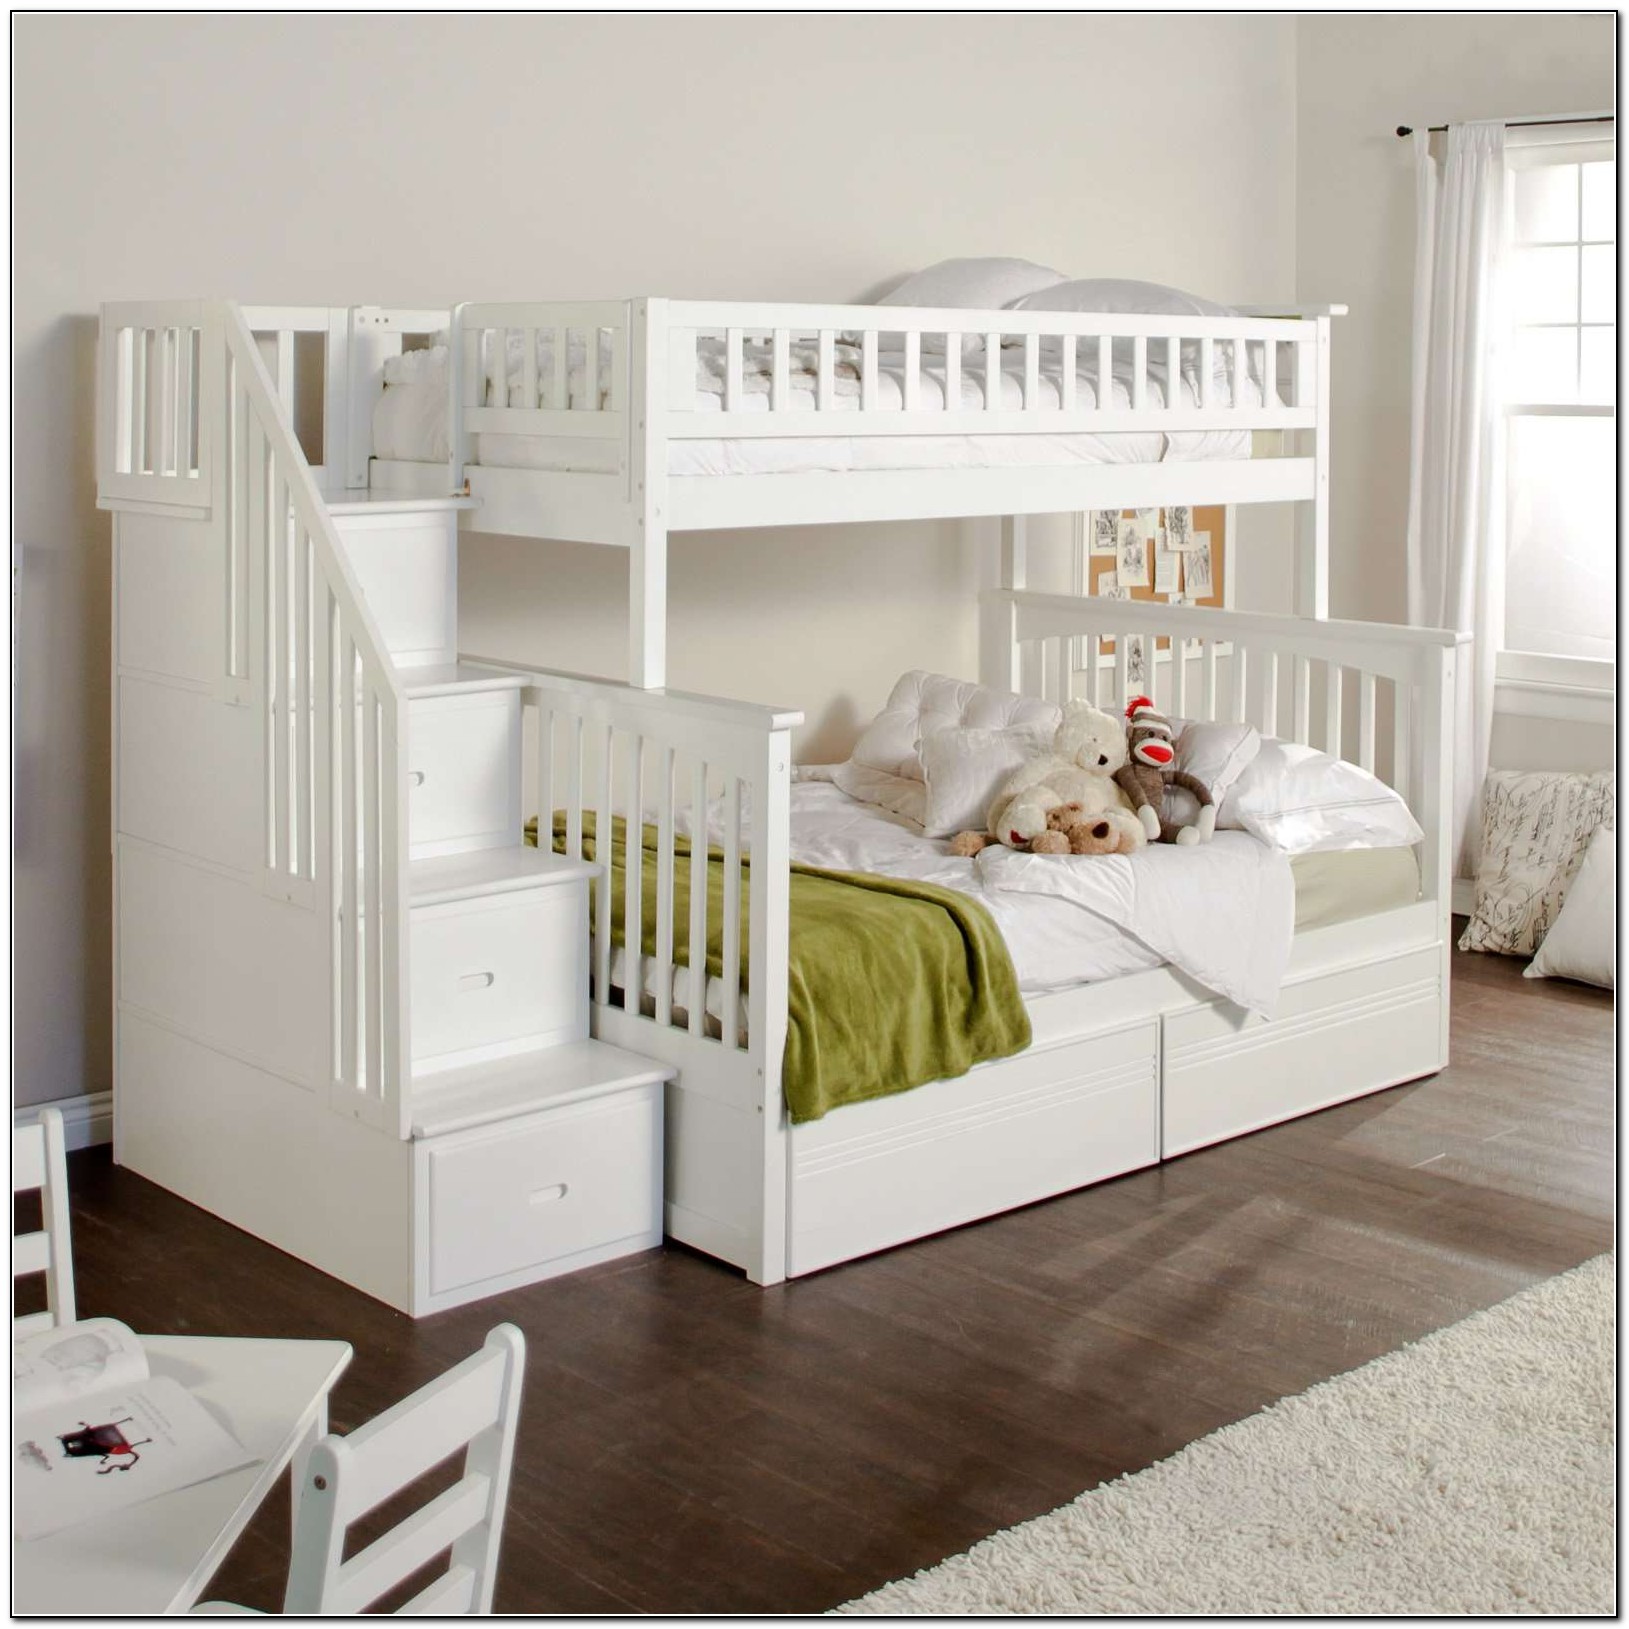 Ikea Kids Beds Australia - Beds : Home Design Ideas #6zDAbV7Qbx5895